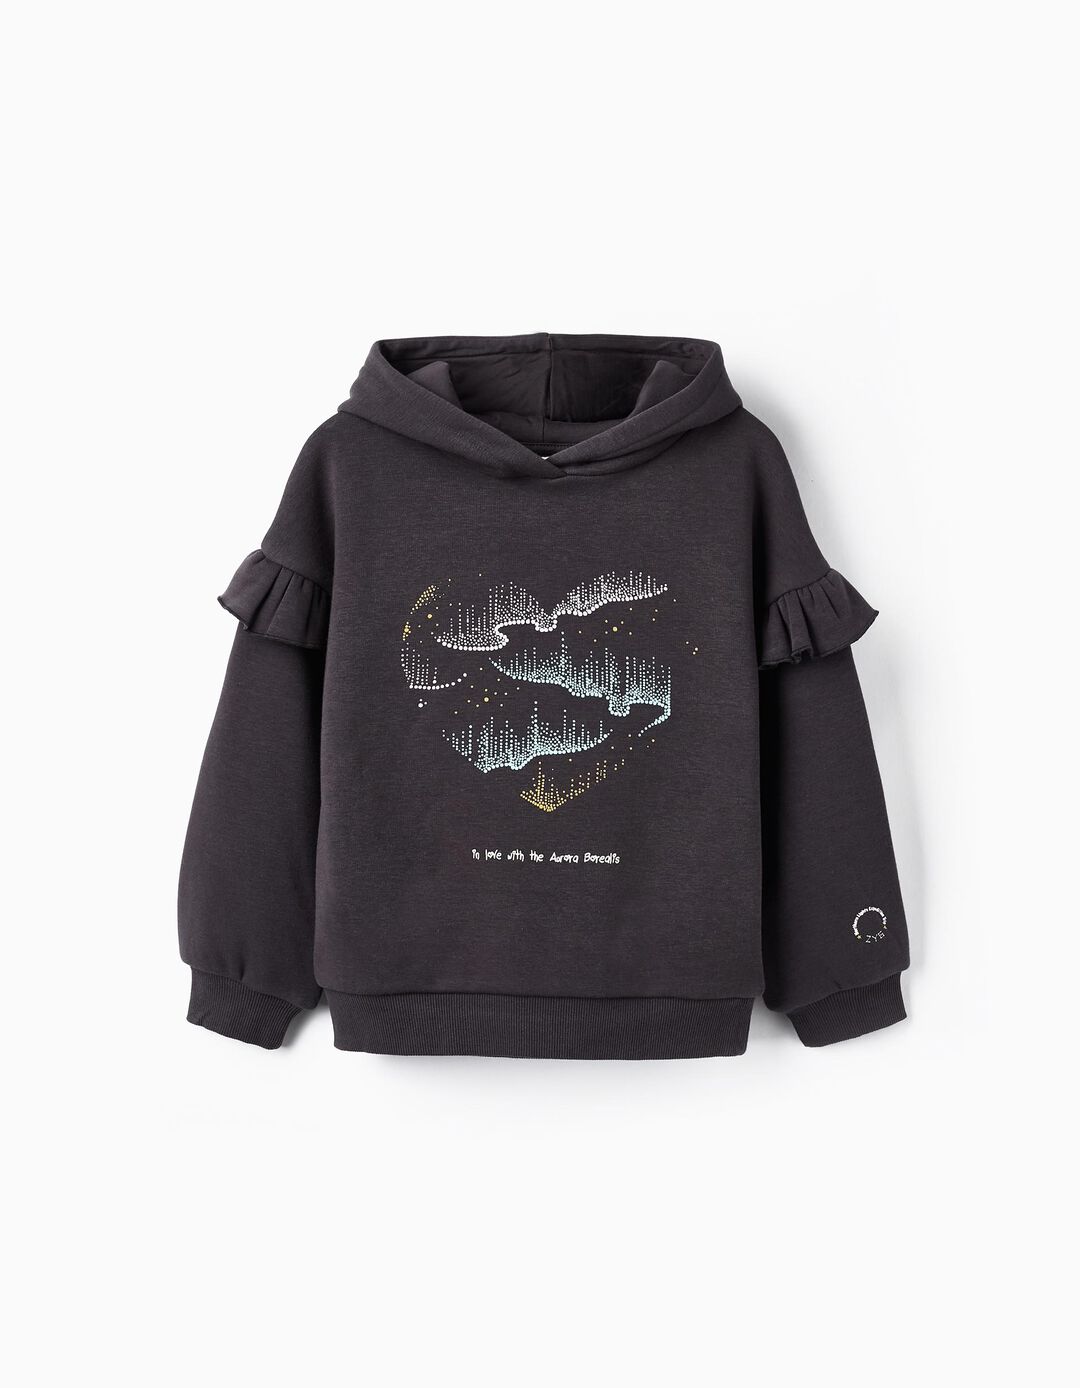 Thermal Hooded Sweatshirt for Girls 'Aurora Borealis', Dark Grey